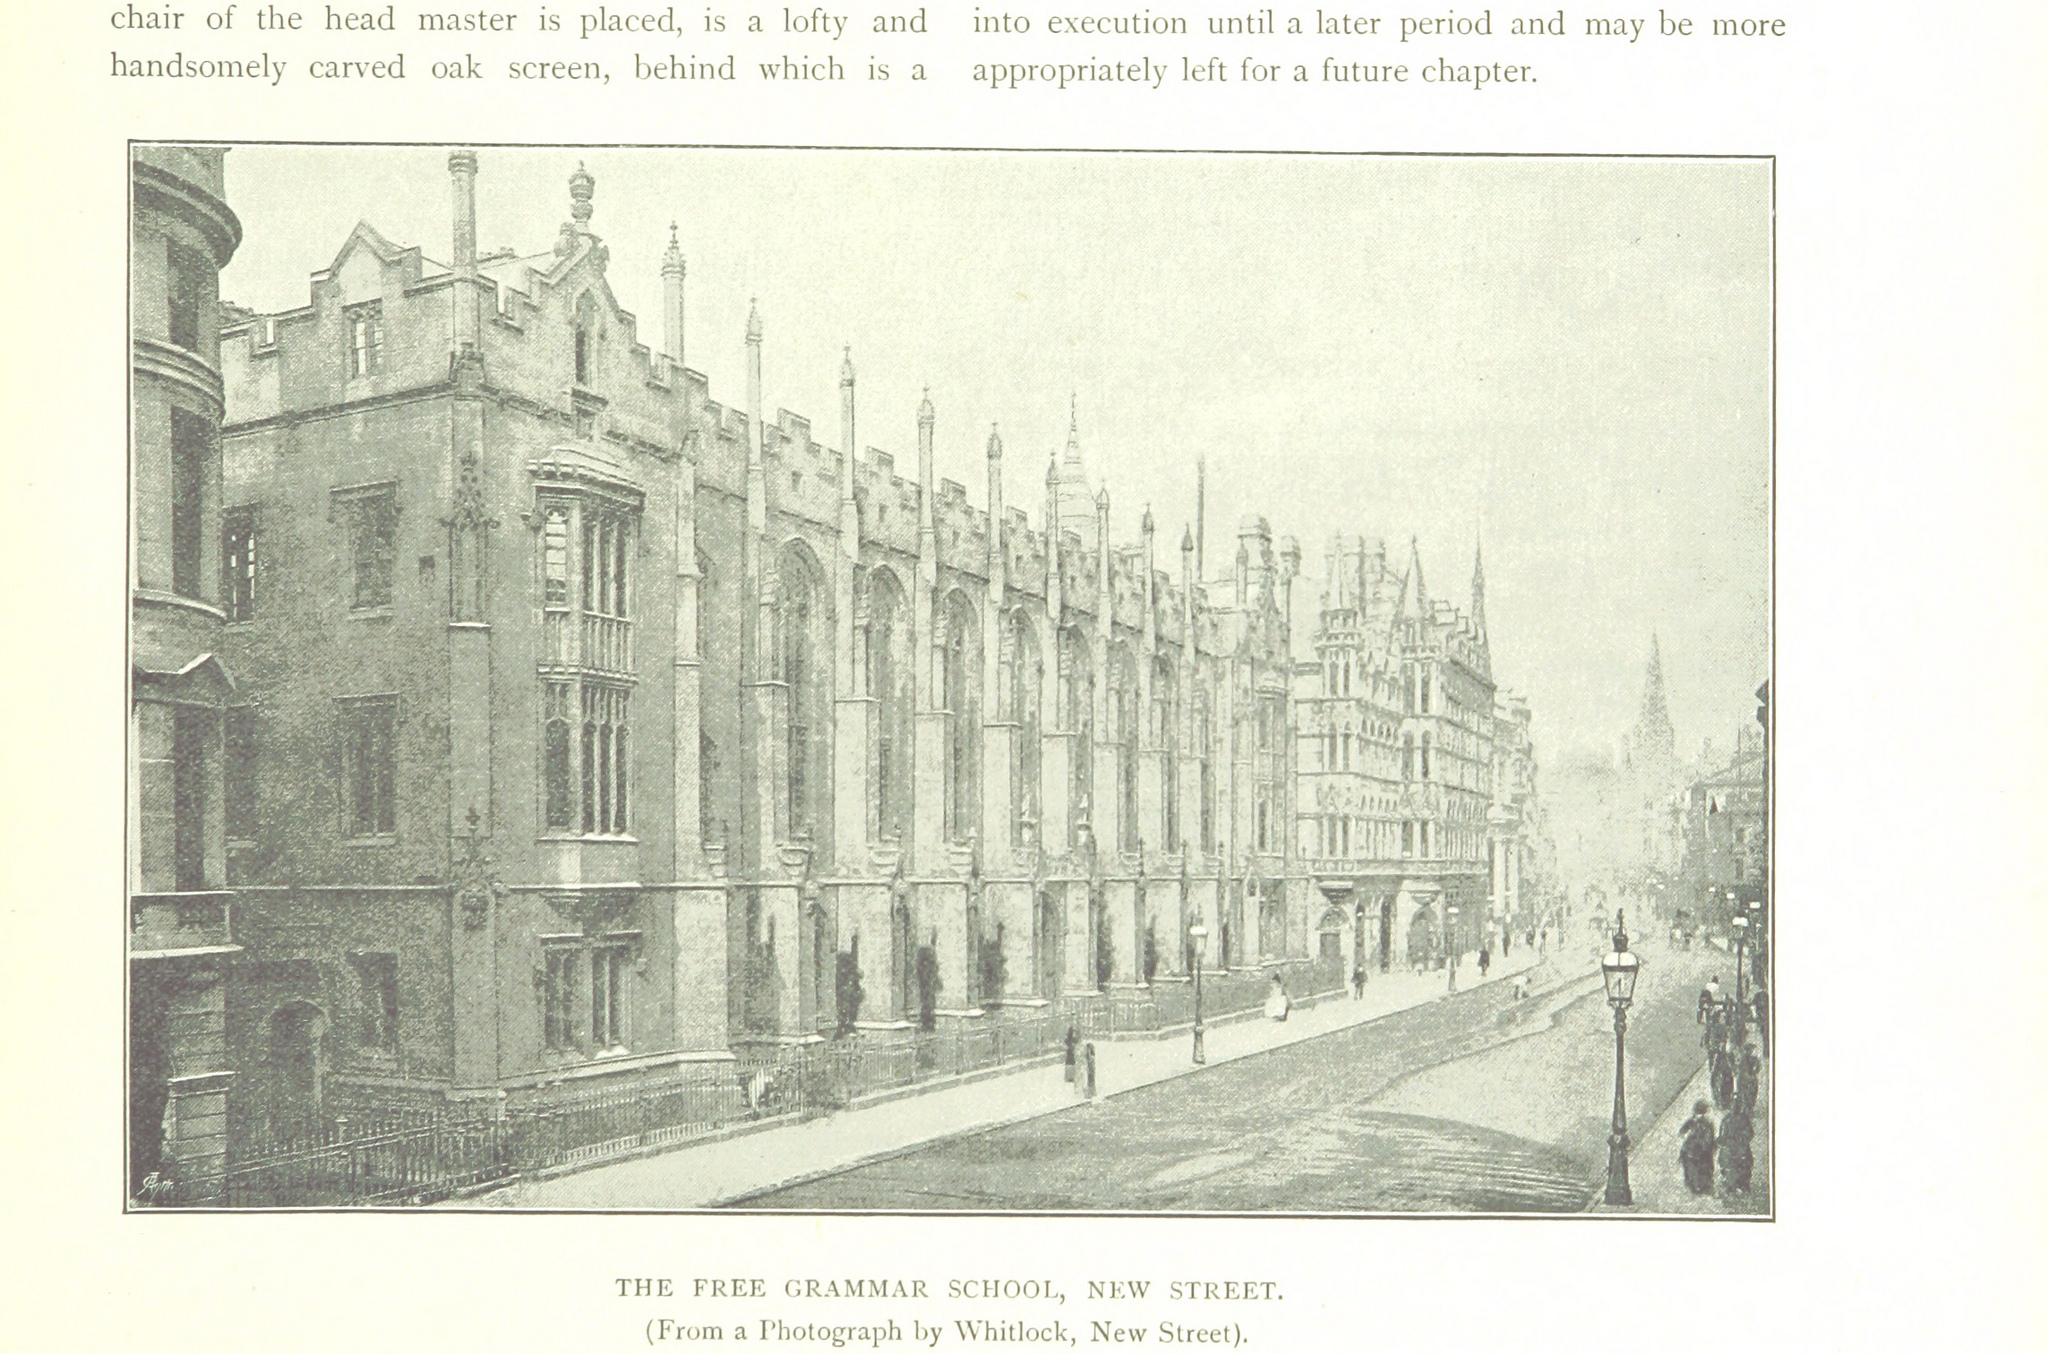 British Library flickr stream, Making of Birmingham Robert K. Dent, Free Grammar School, New Street